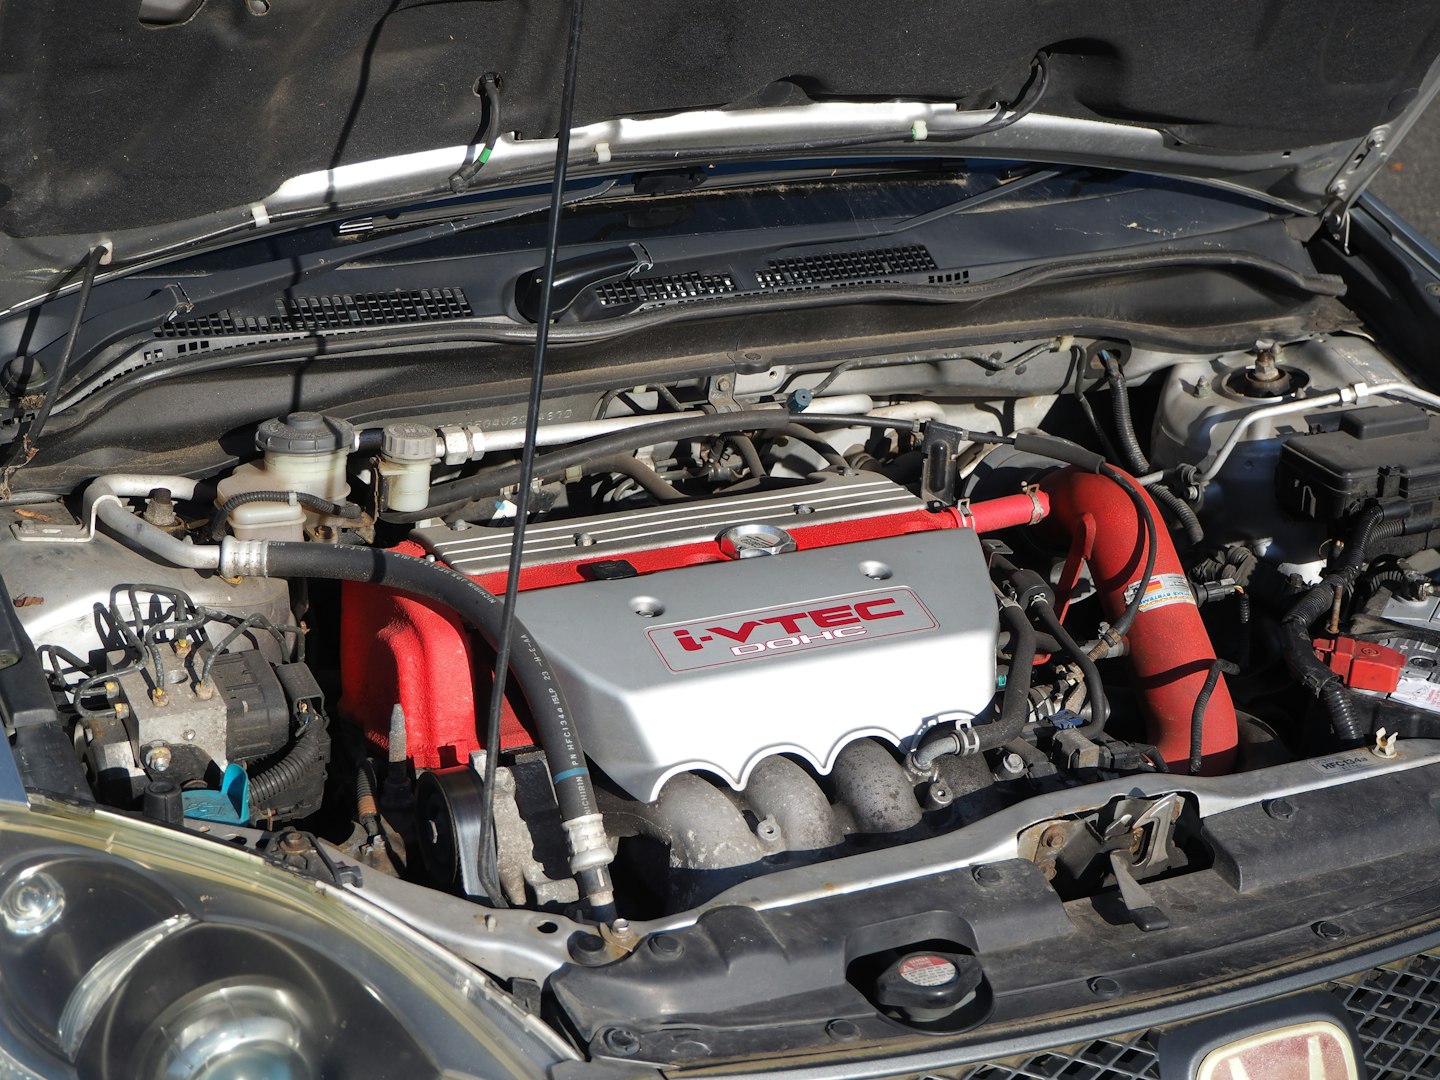 The engine bay of a Honda Civi Type R